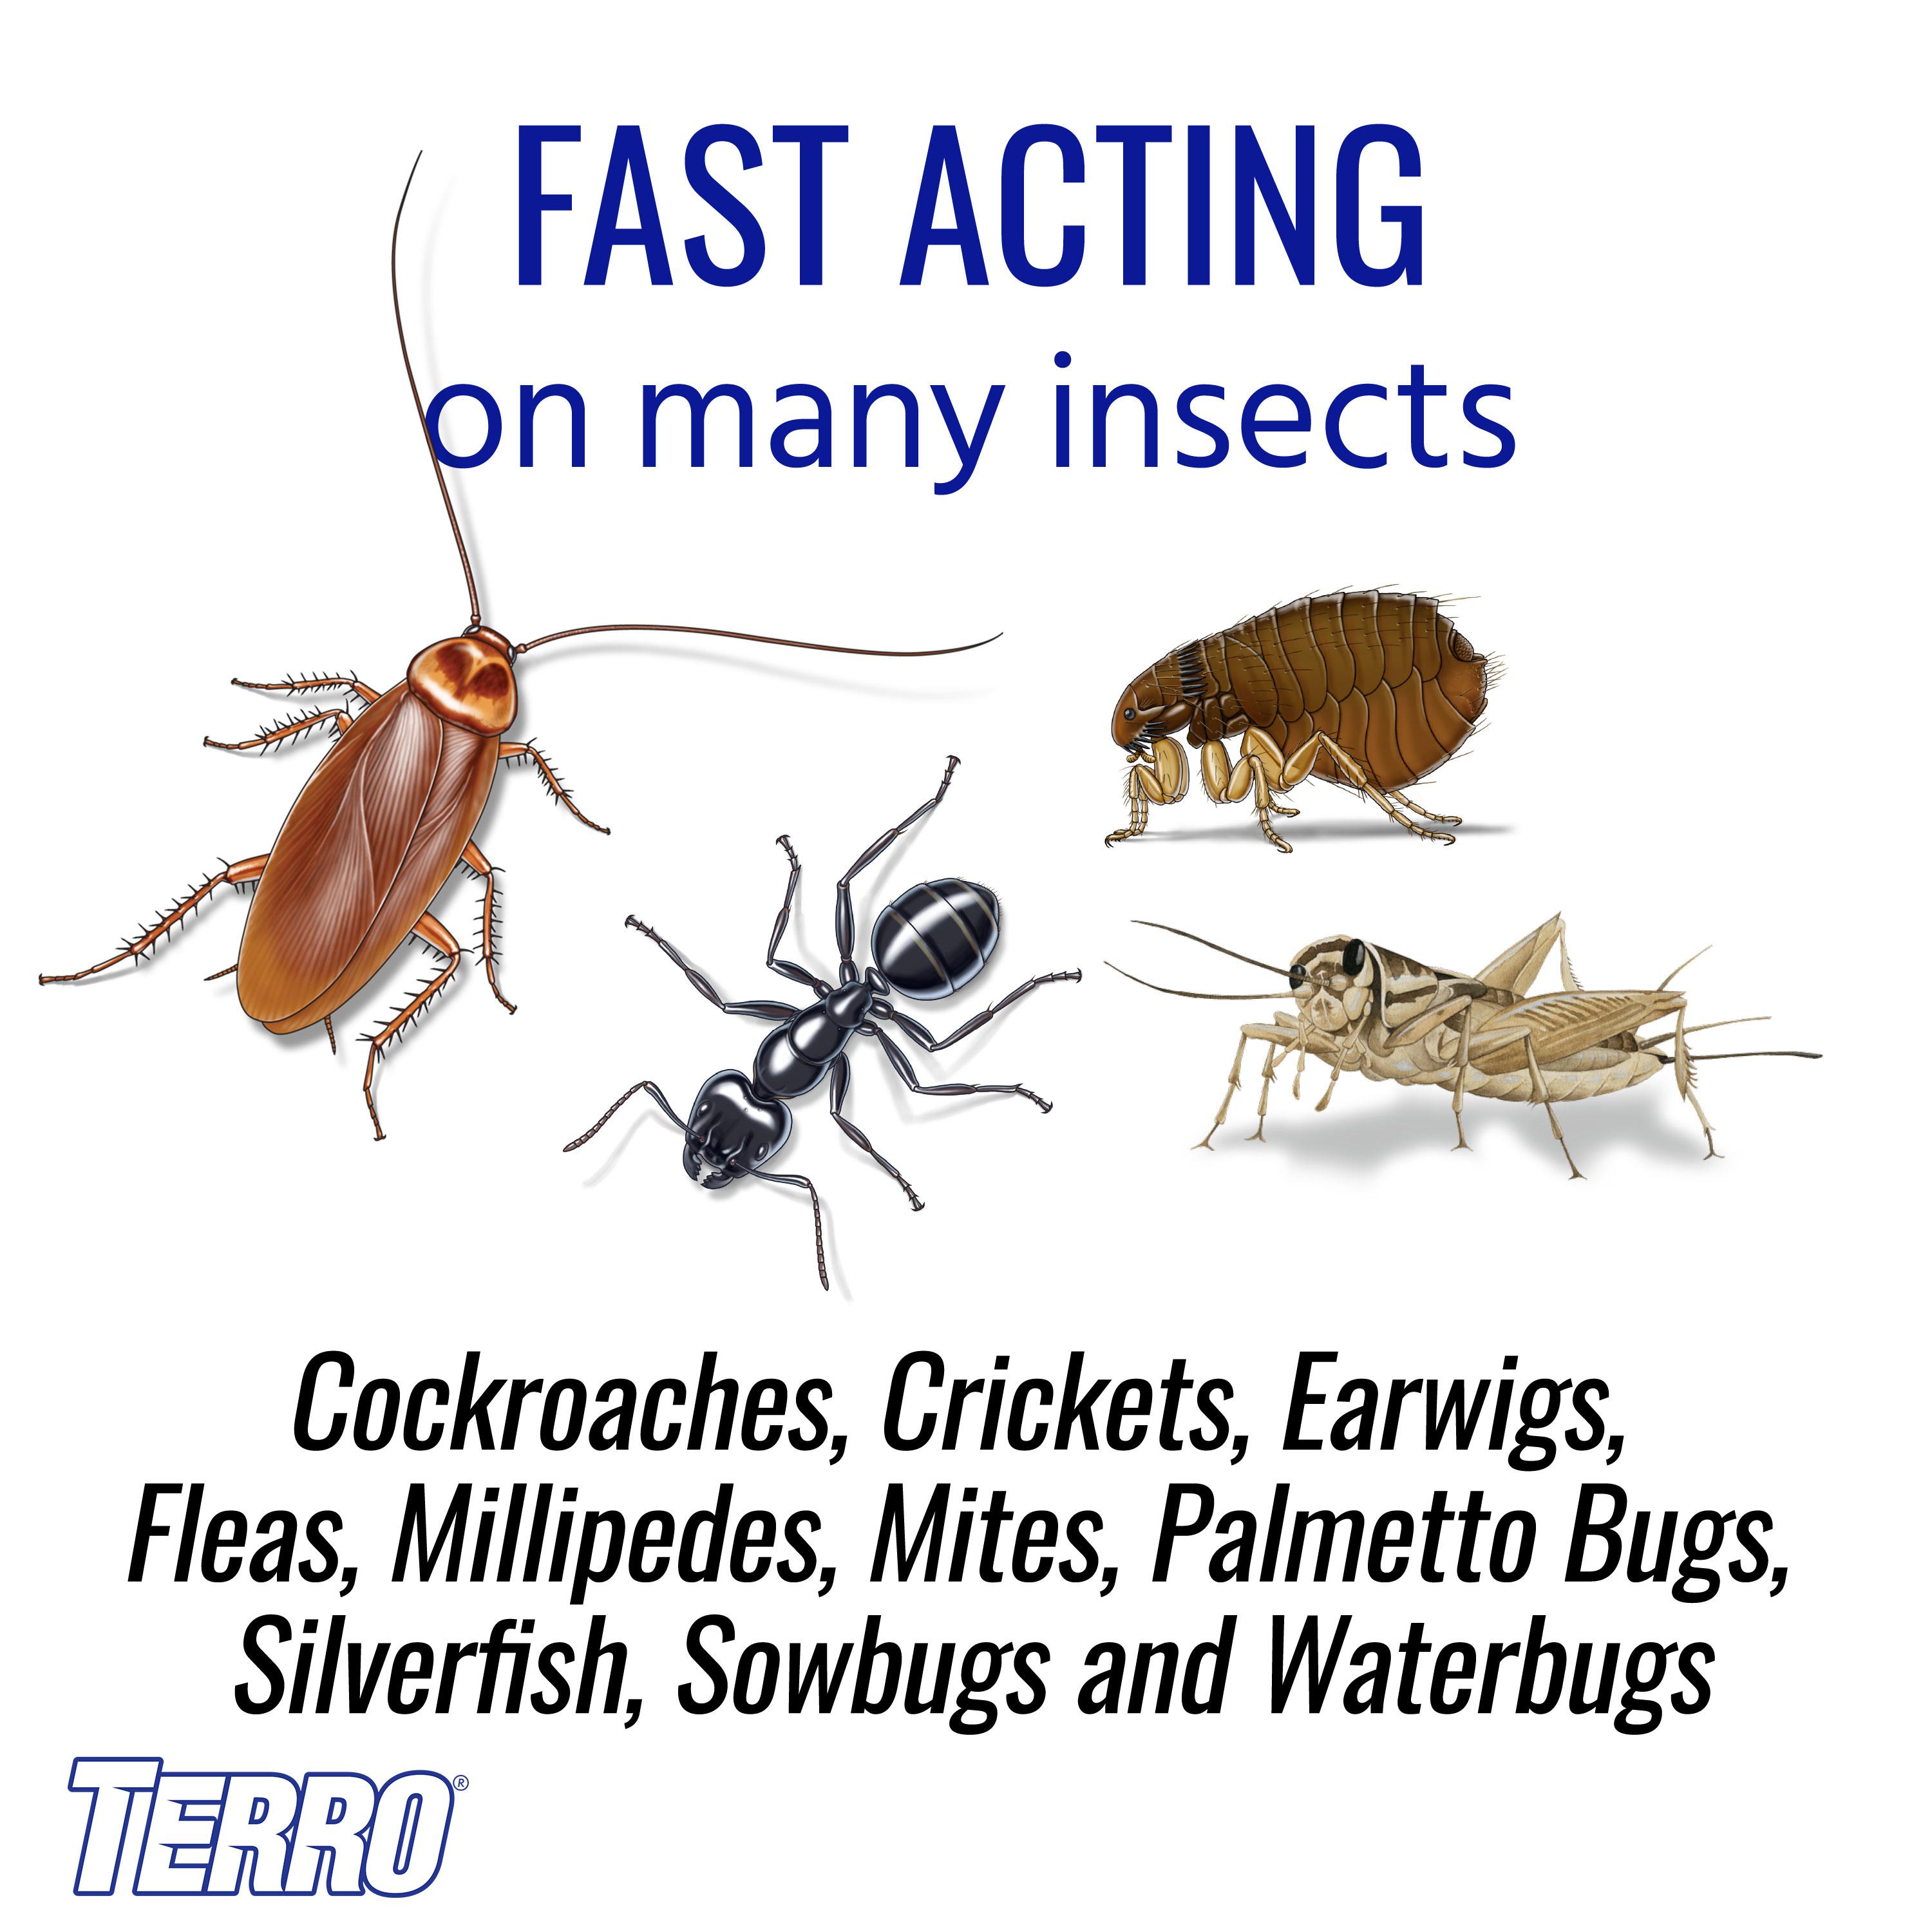 TERRO 3 lb Ant Killer Plus Multi-Purpose Insect Control - image 5 of 13